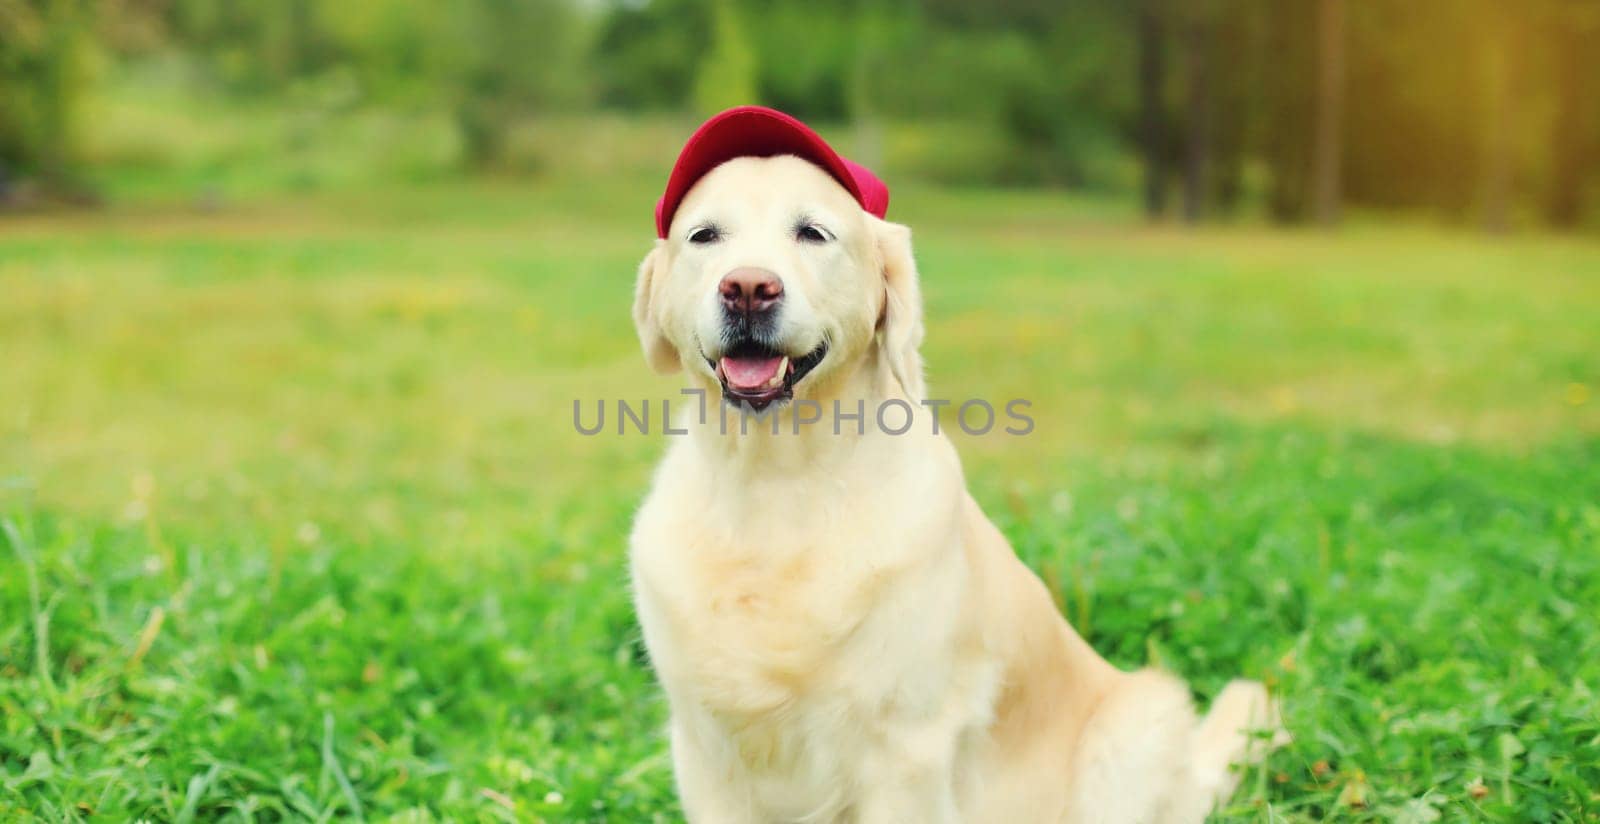 Portrait of Golden Retriever dog in red baseball cap sitting on green grass in summer park